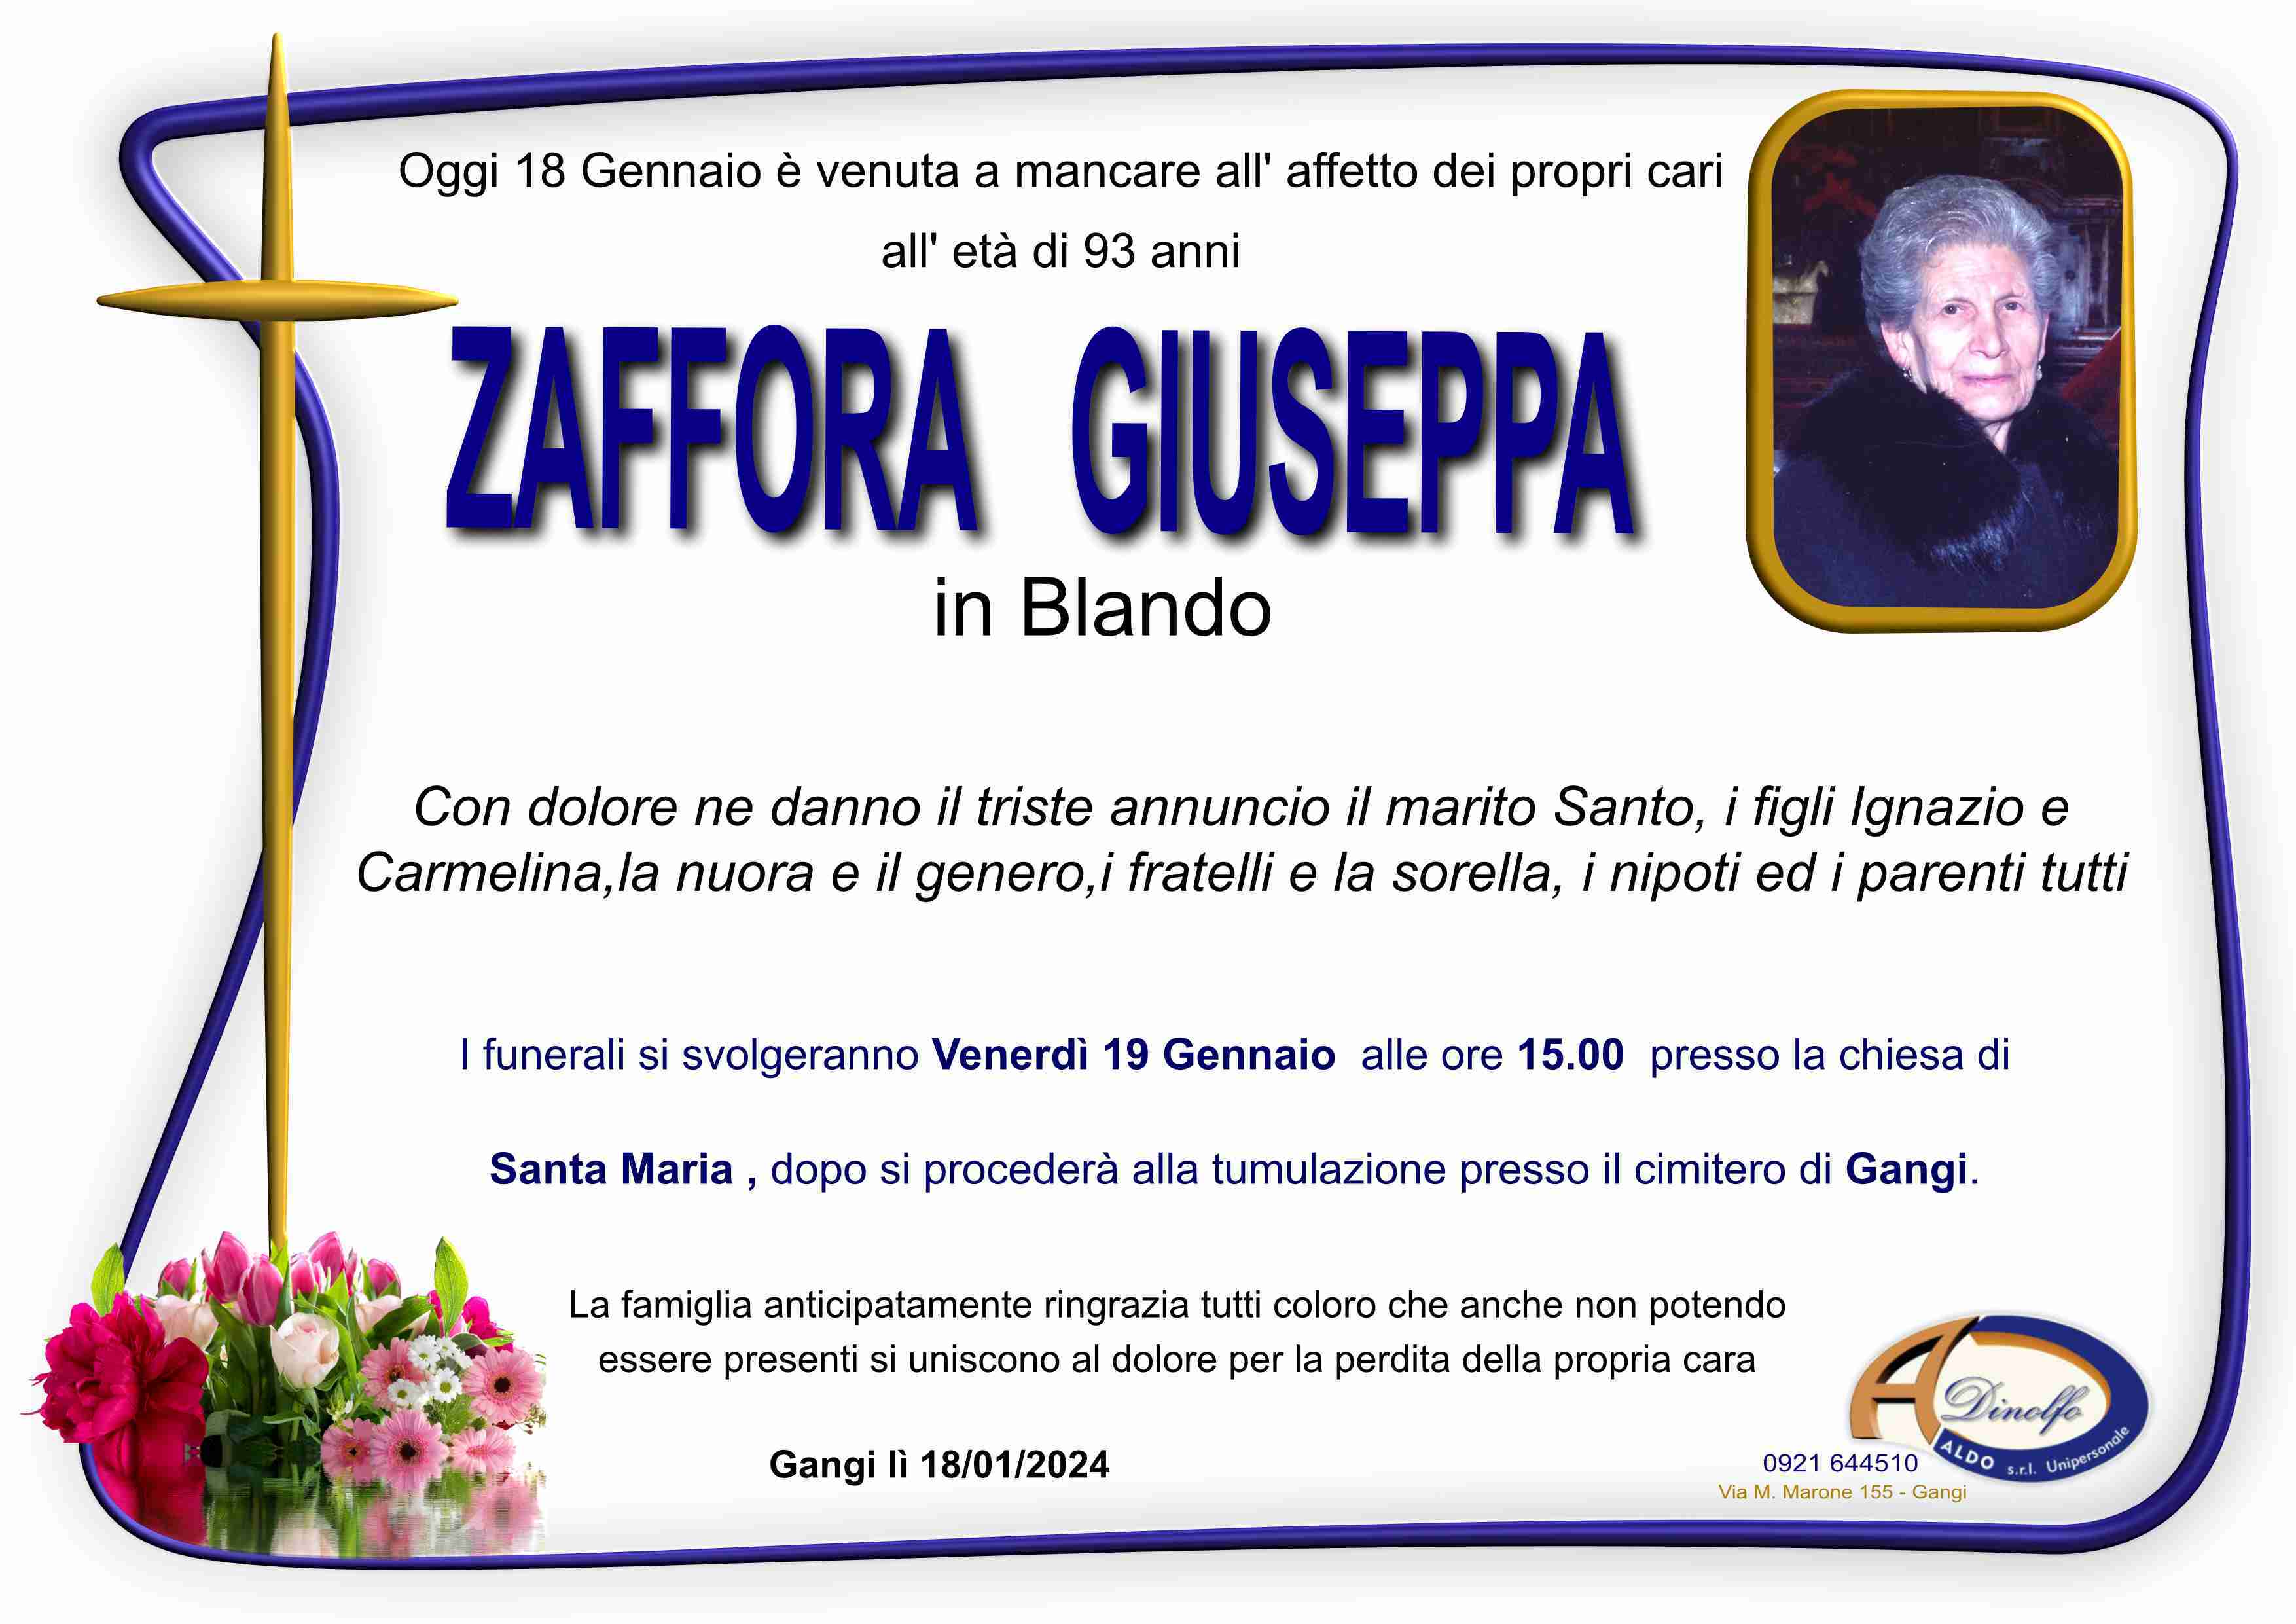 Giuseppa Zaffora